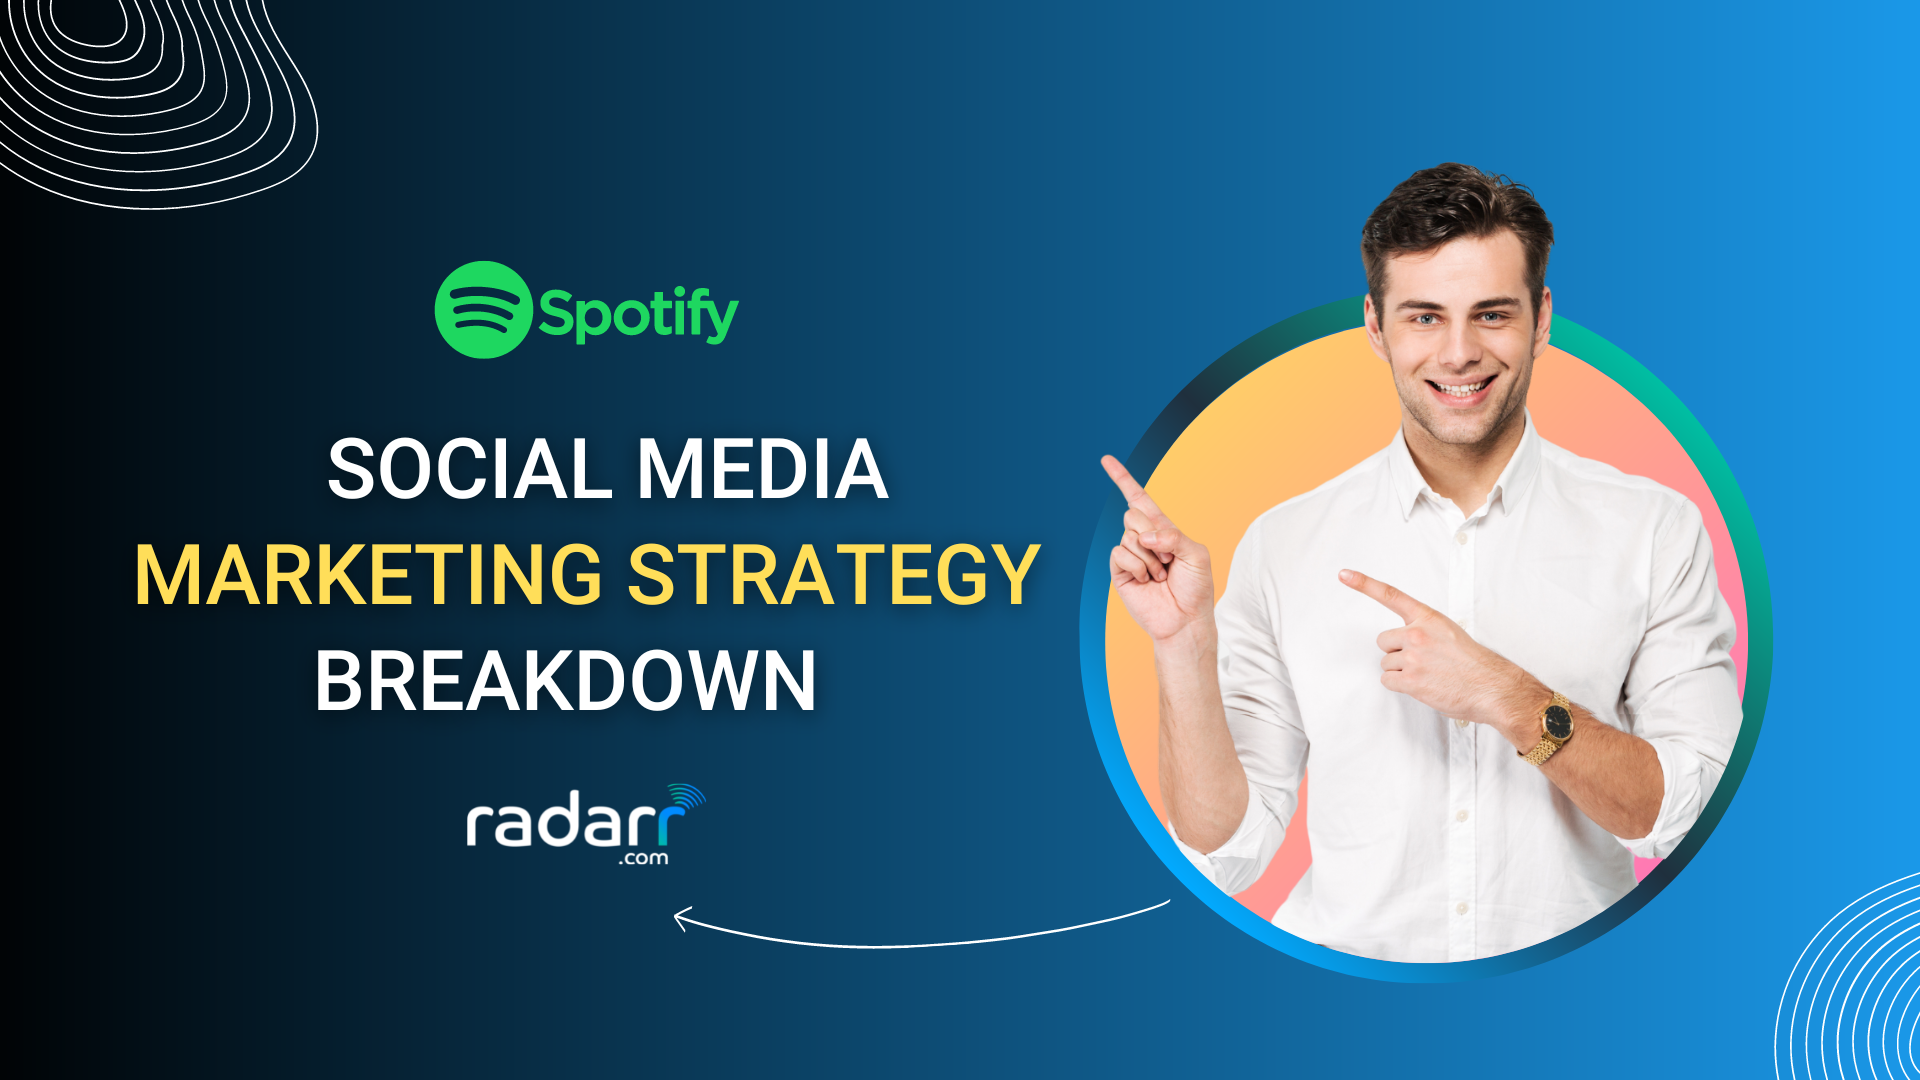 spotify social media marketing strategy